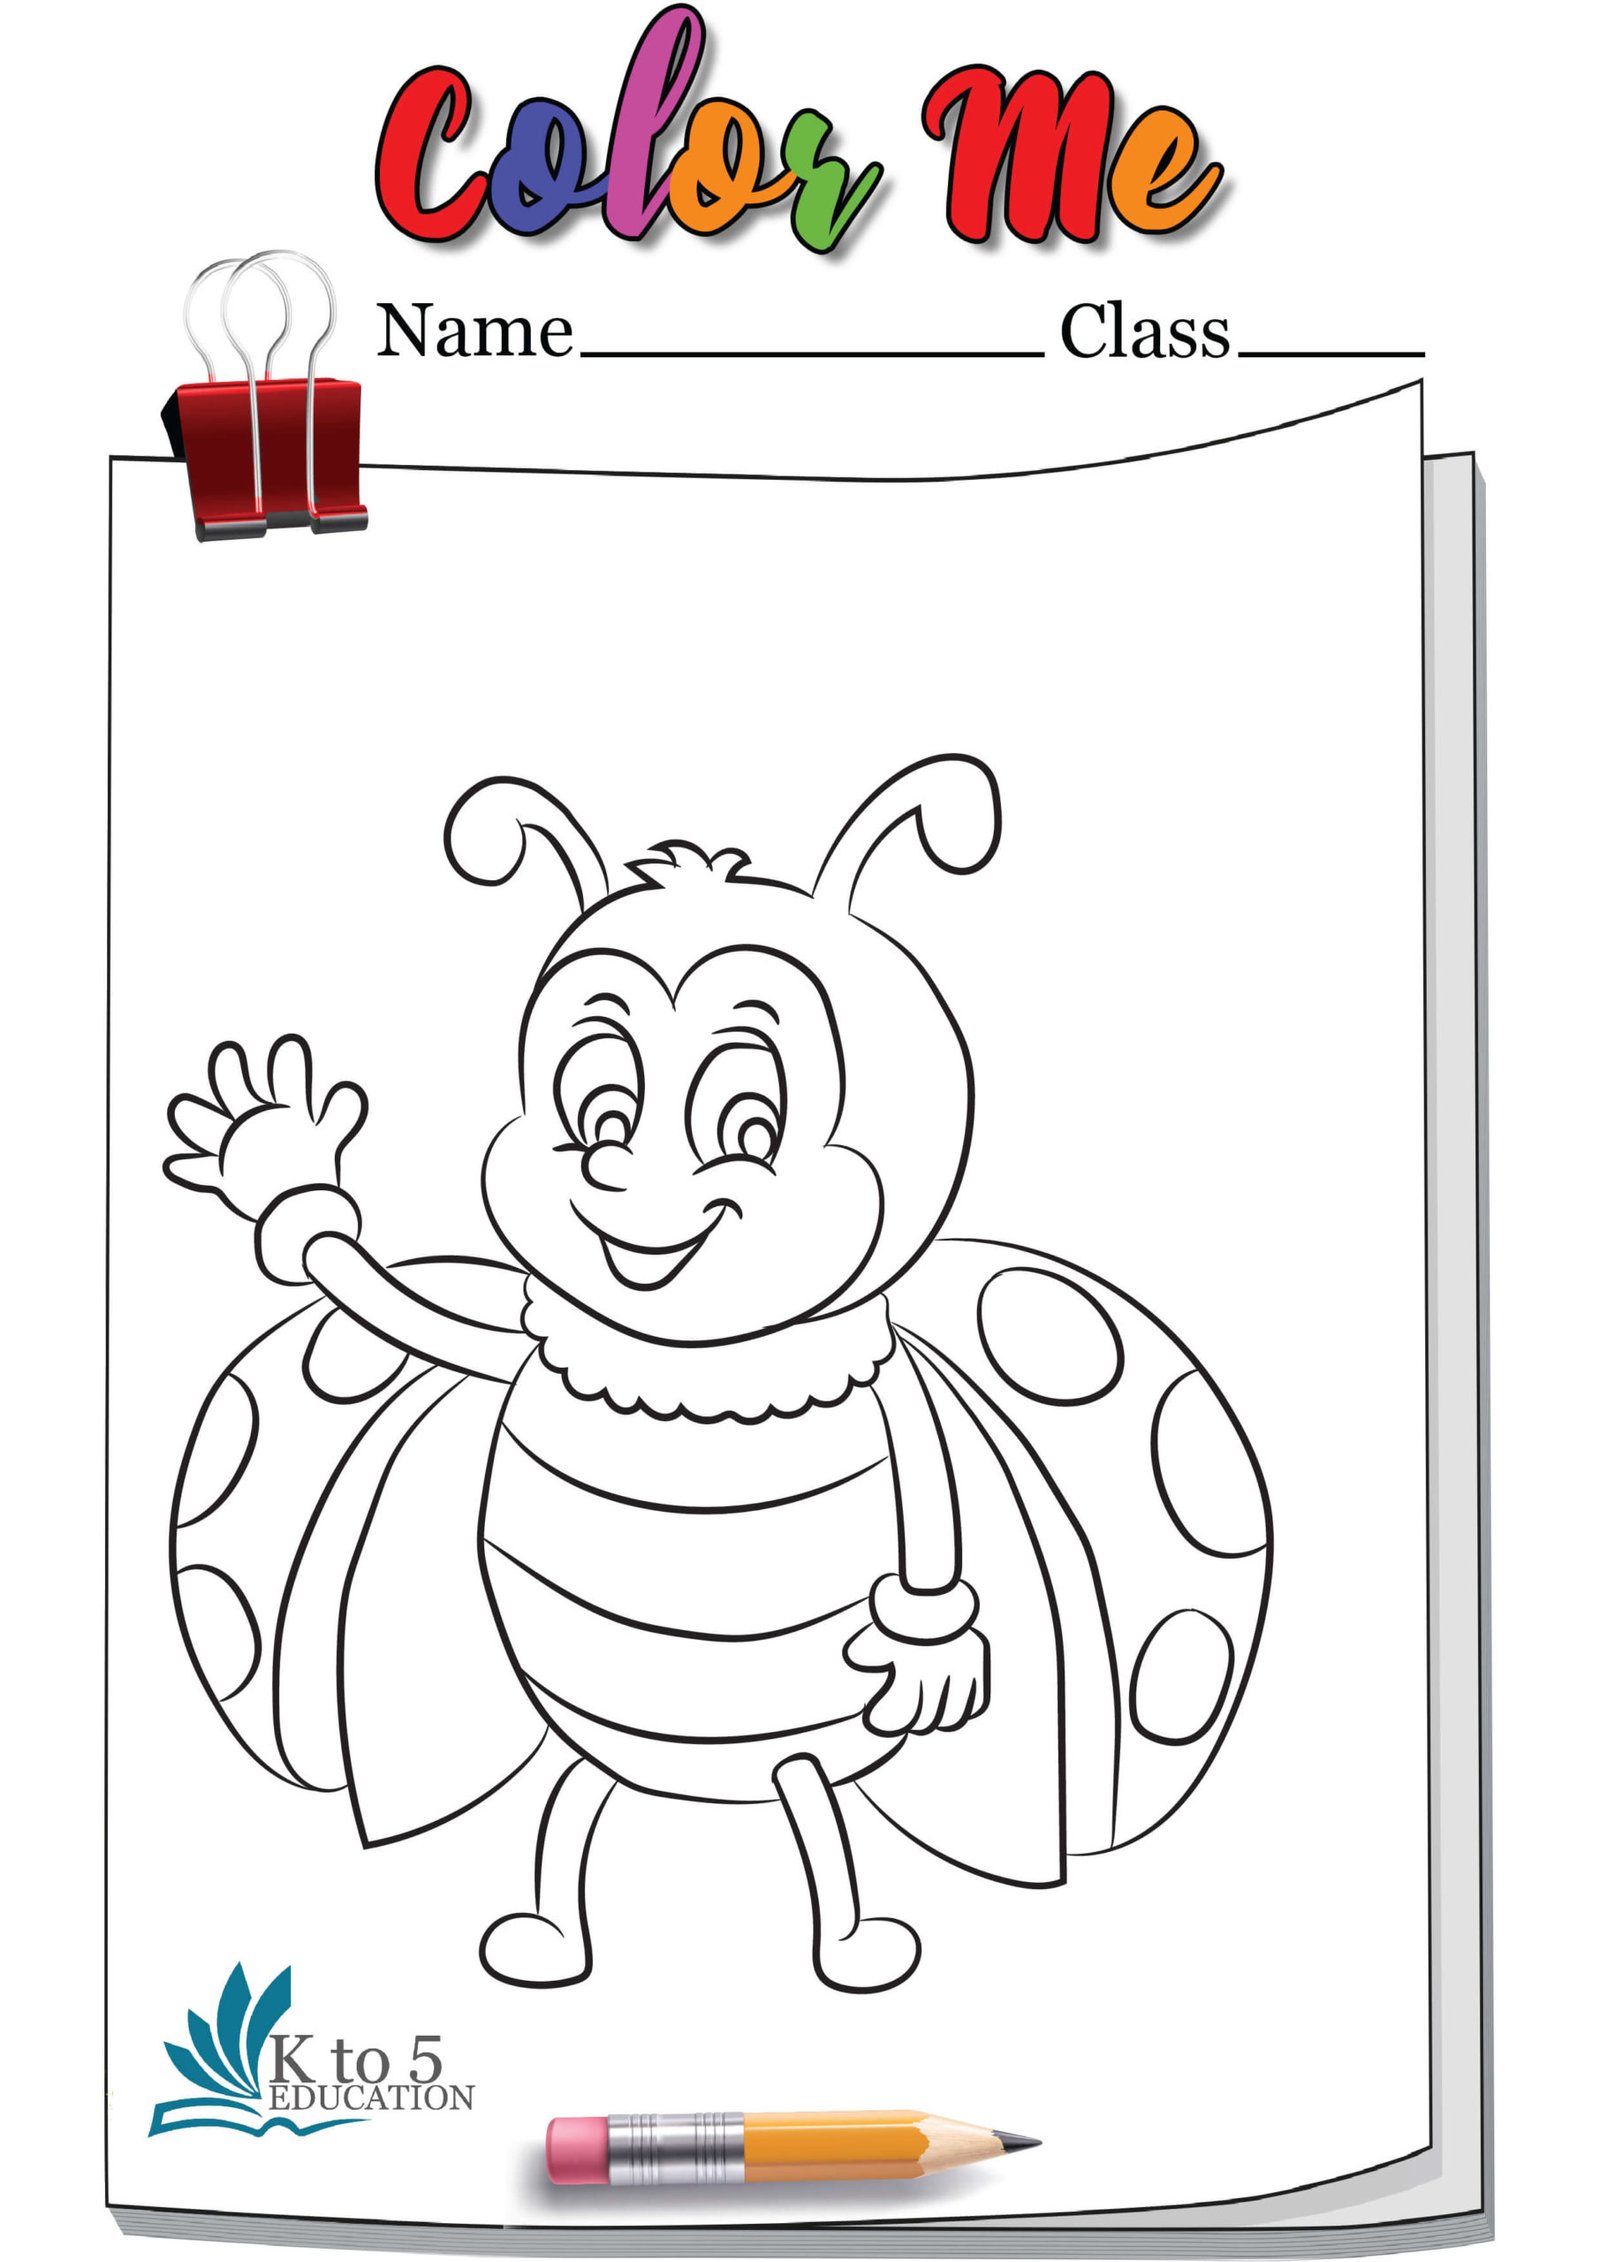 Ladybug waving hand coloring page worksheet